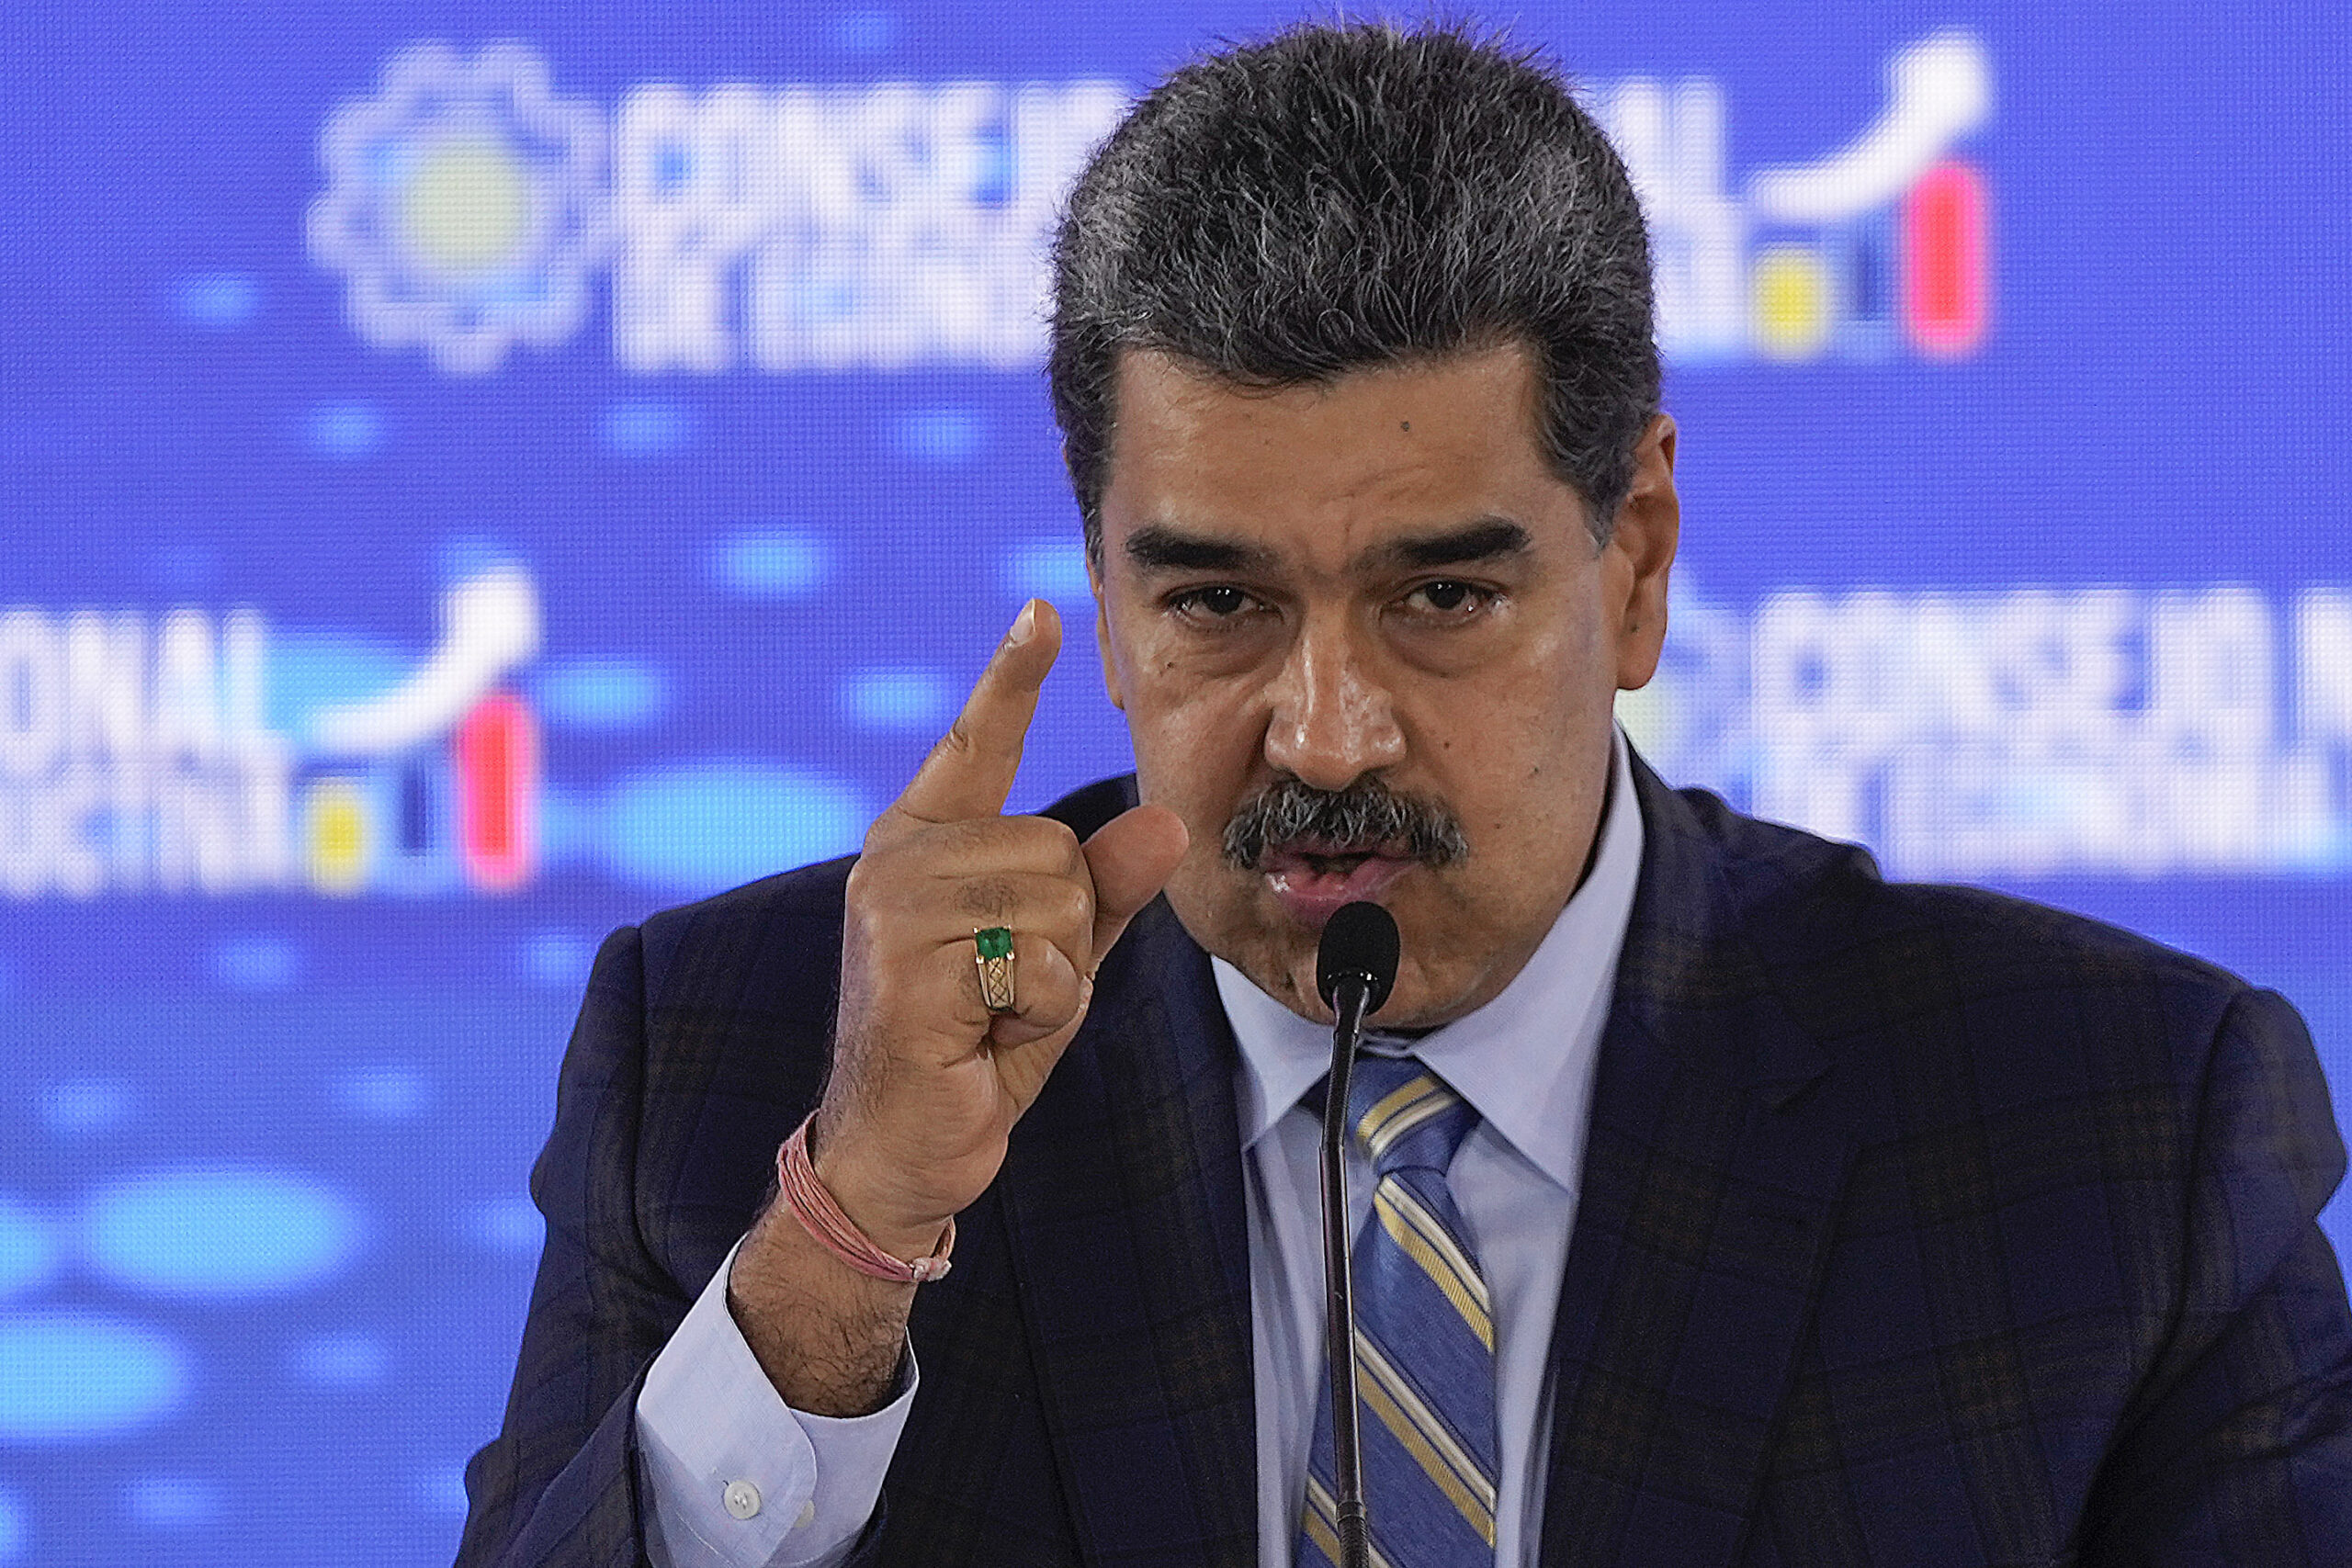 “Beyond absurd”: GOP savages Biden easing of Venezuelan oil sanctions